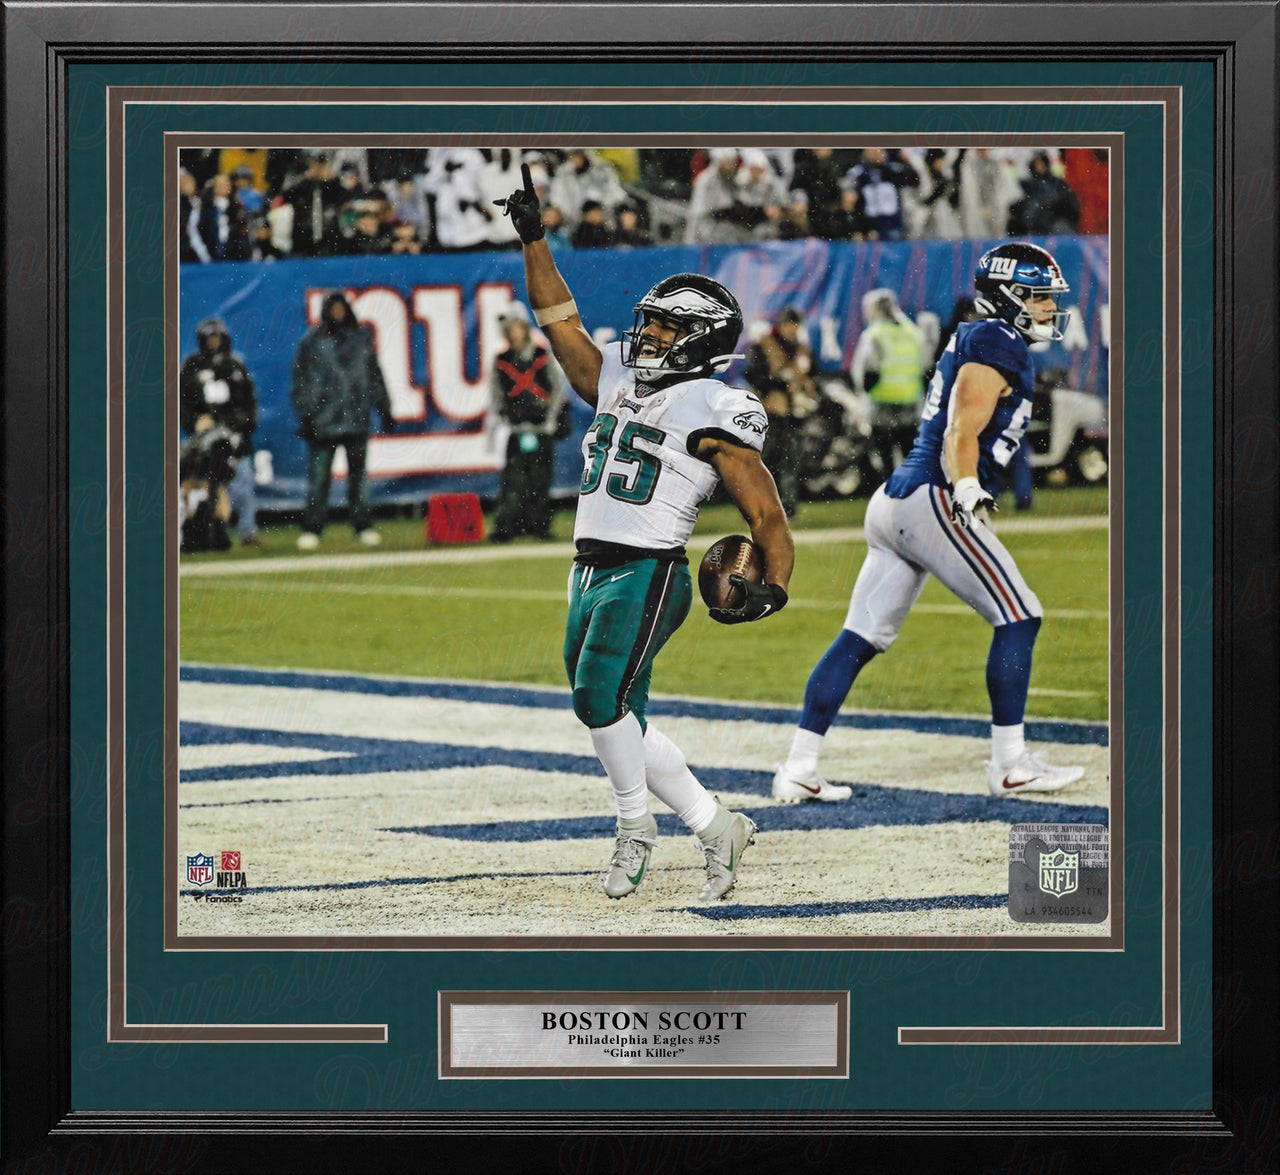 Boston Scott Touchdown Celebration v. Giants Philadelphia Eagles 16" x 20" Framed Football Photo